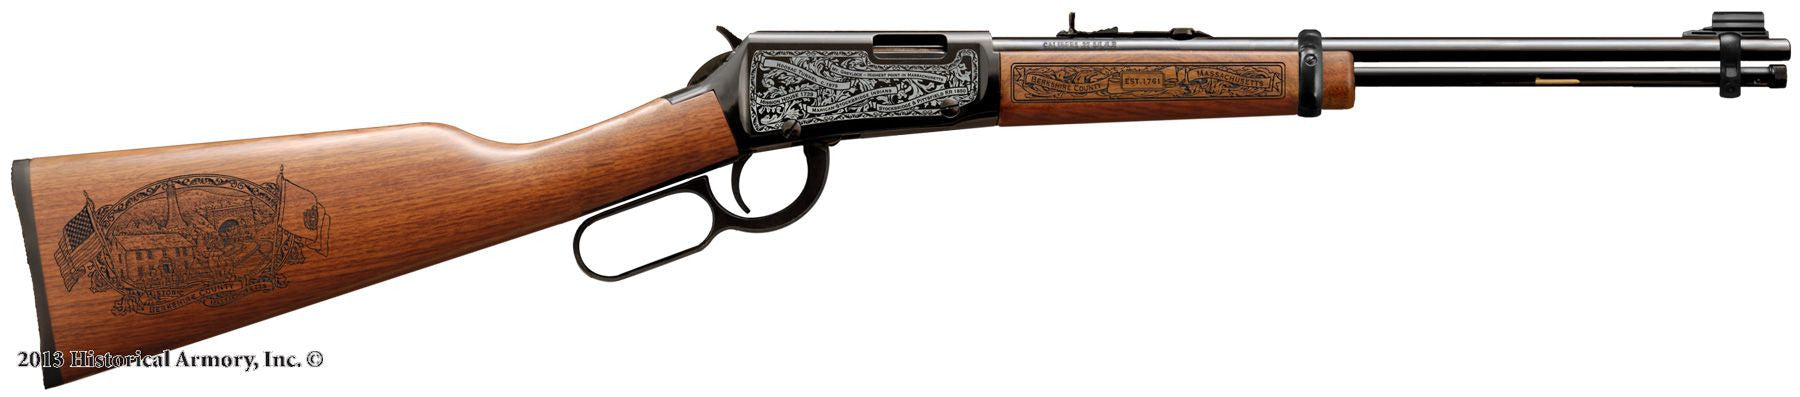 Berkshire county massachusetts engraved rifle H001